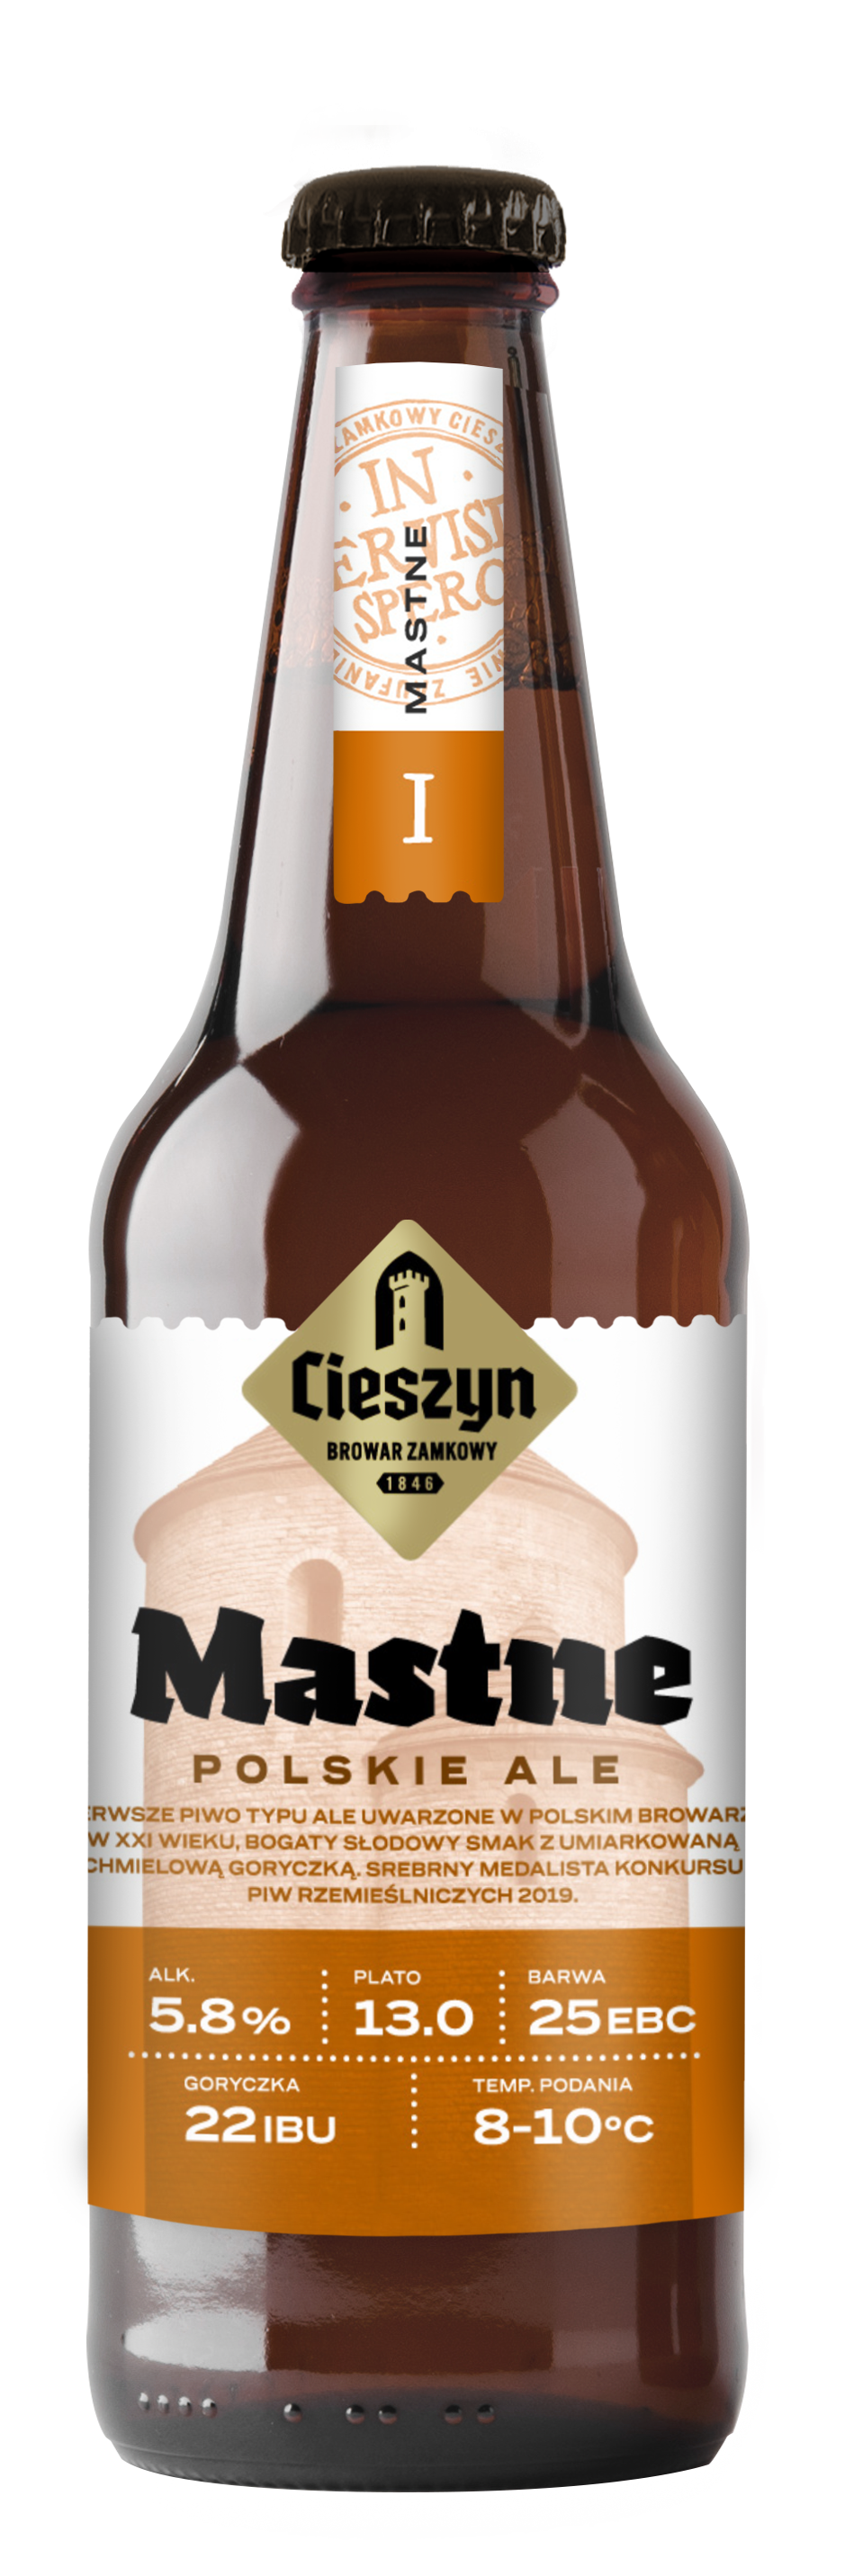 Mastne - Polish Ale